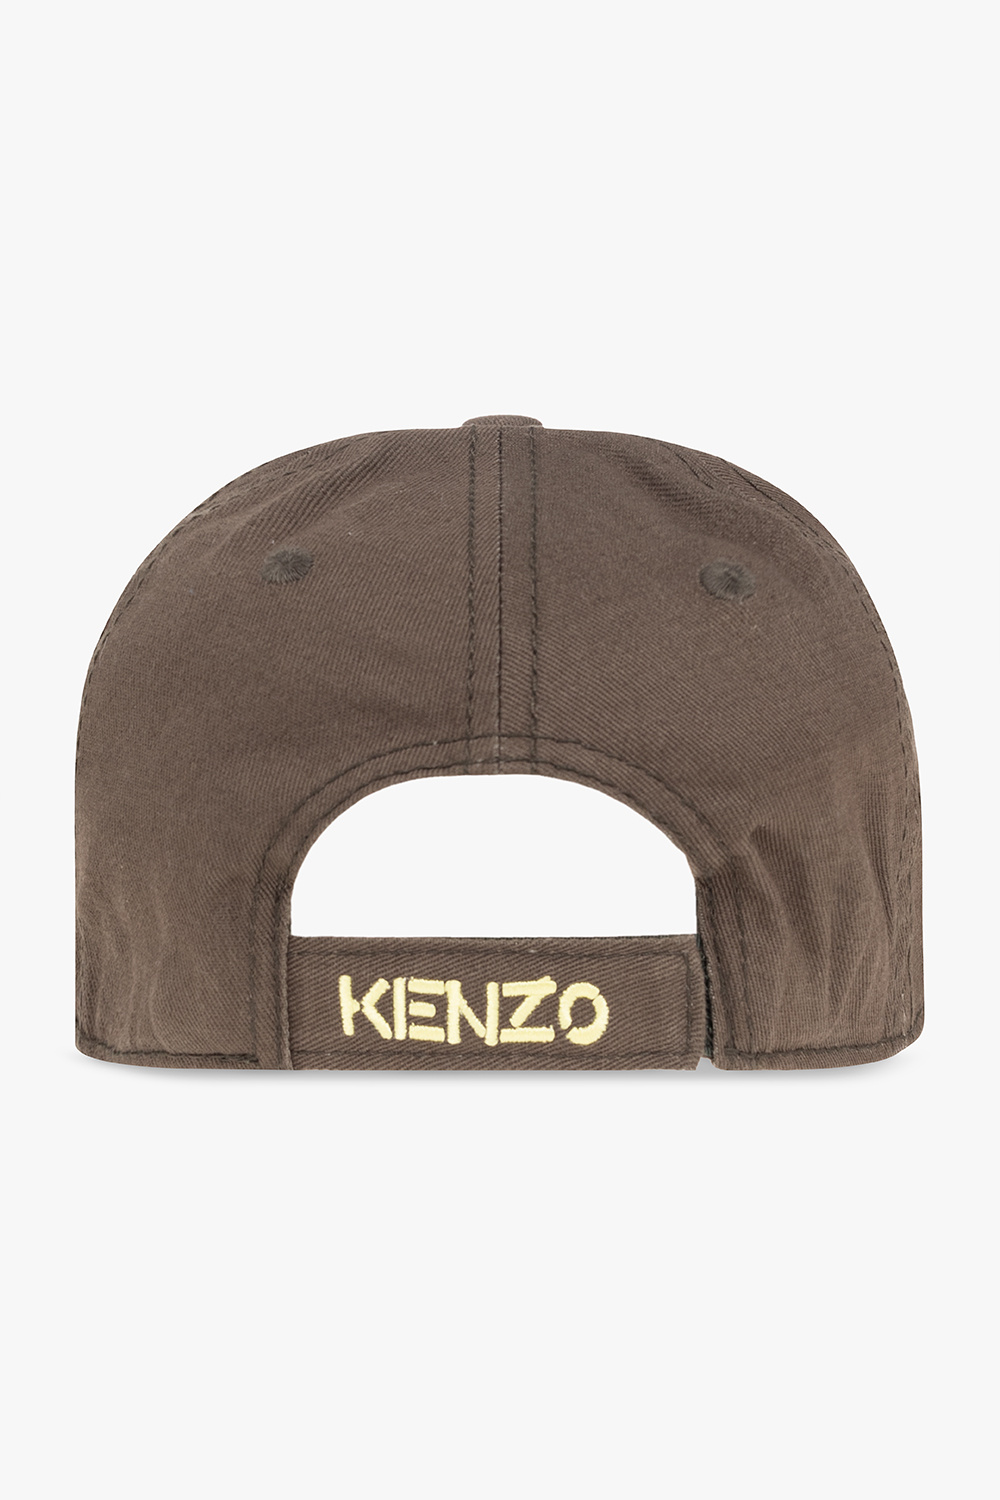 Kenzo Kids Pull-on cap